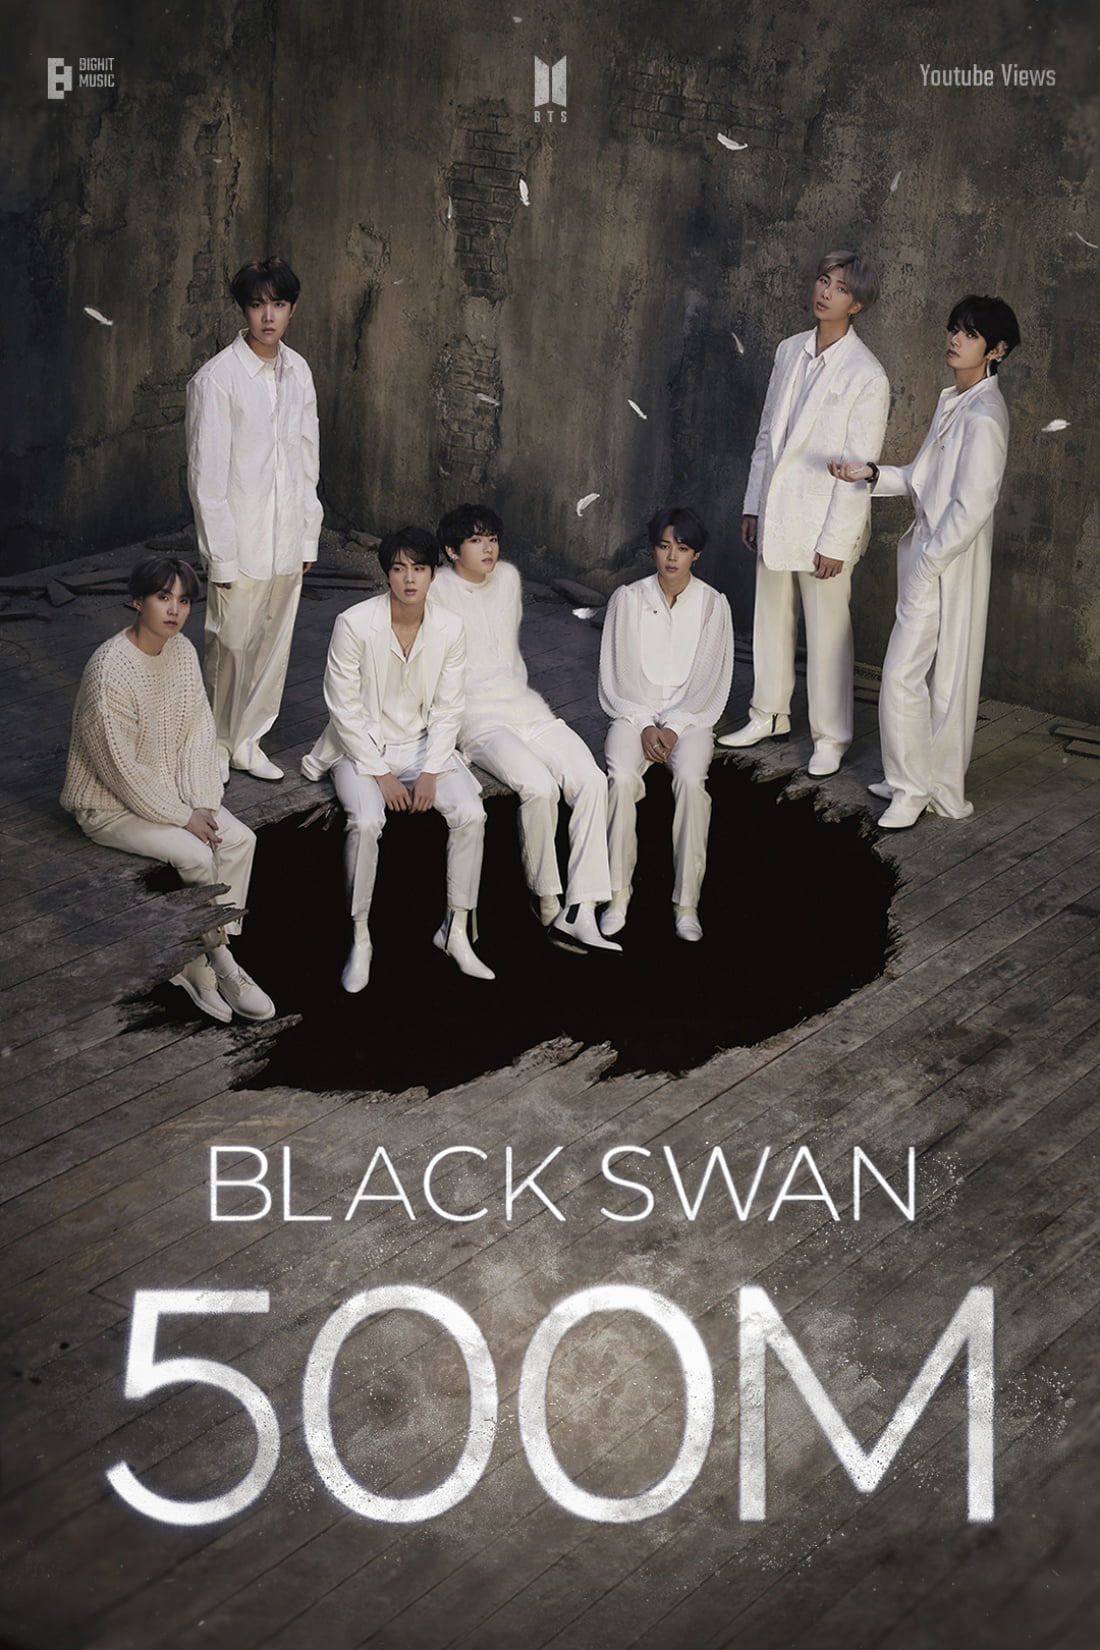 BTS, 'Black Swan' MV exceeds 500 million views... 17th in total